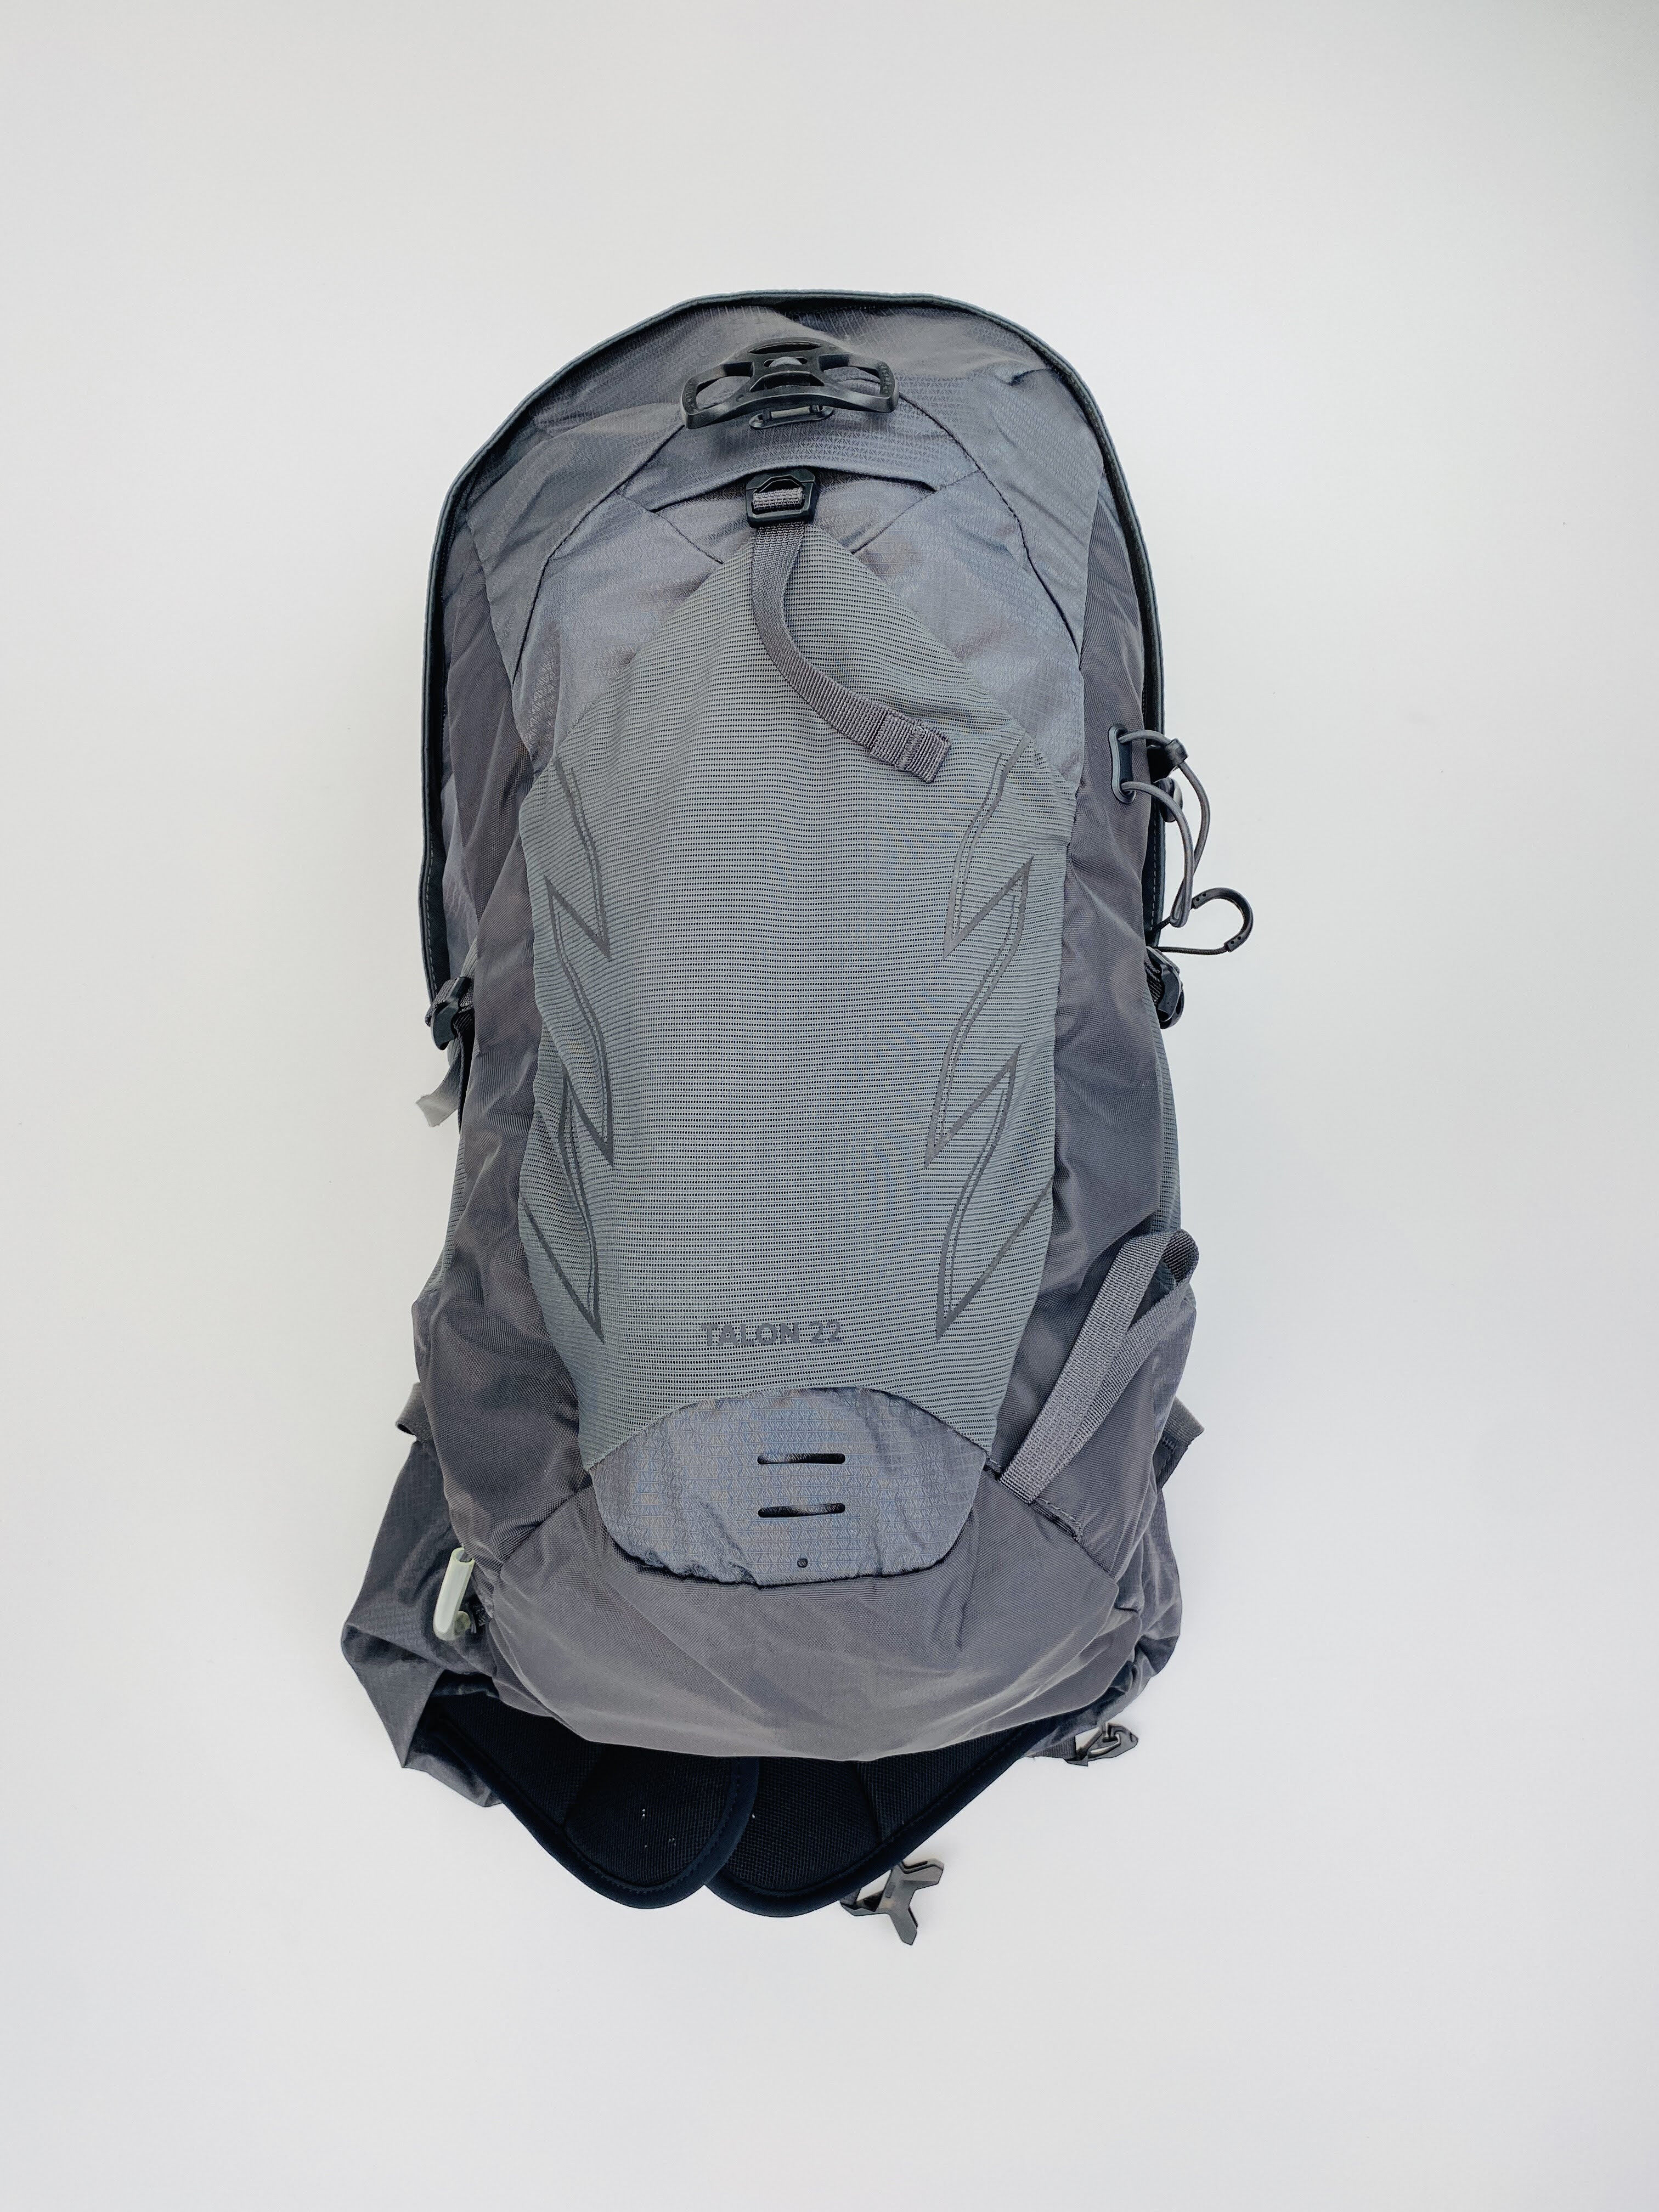 Talon 22 - Second Hand Backpack - Grey - M/L